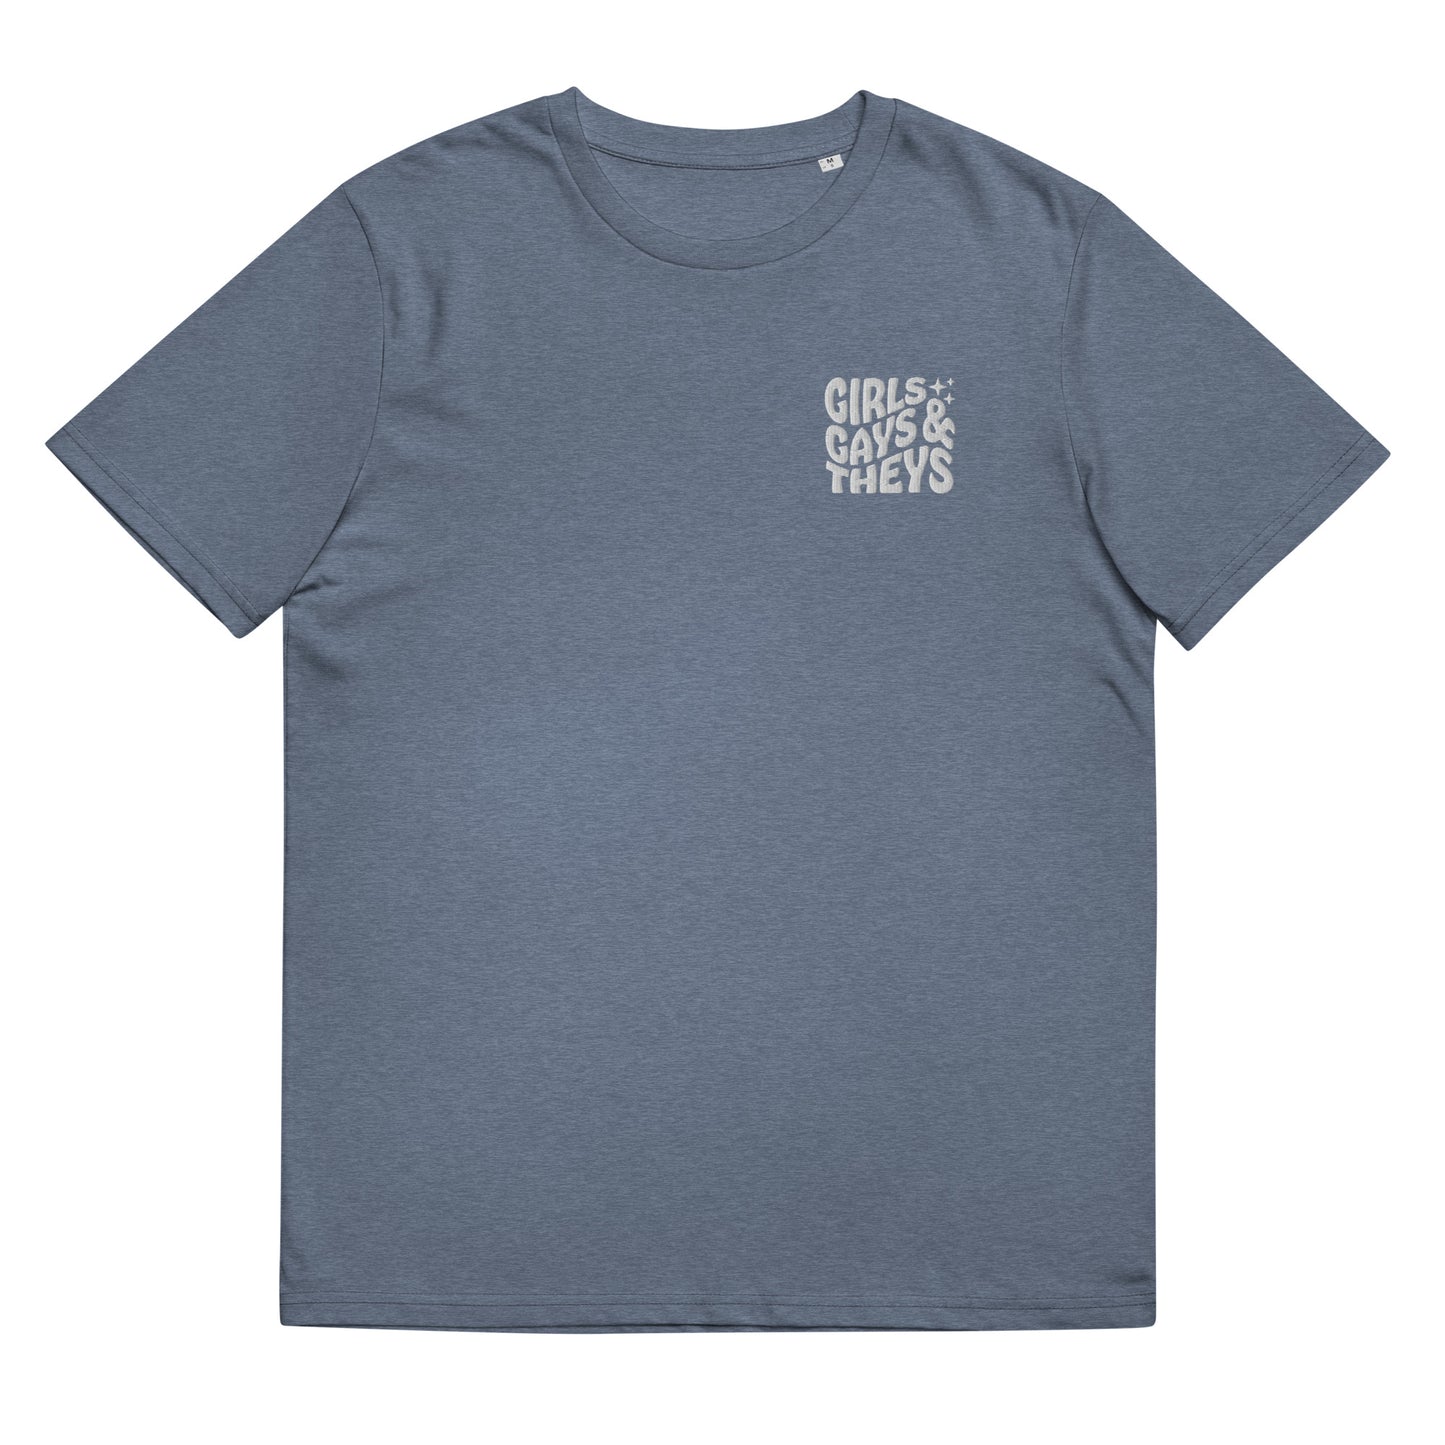 Organic cotton t-shirt: Girls Gays & They's